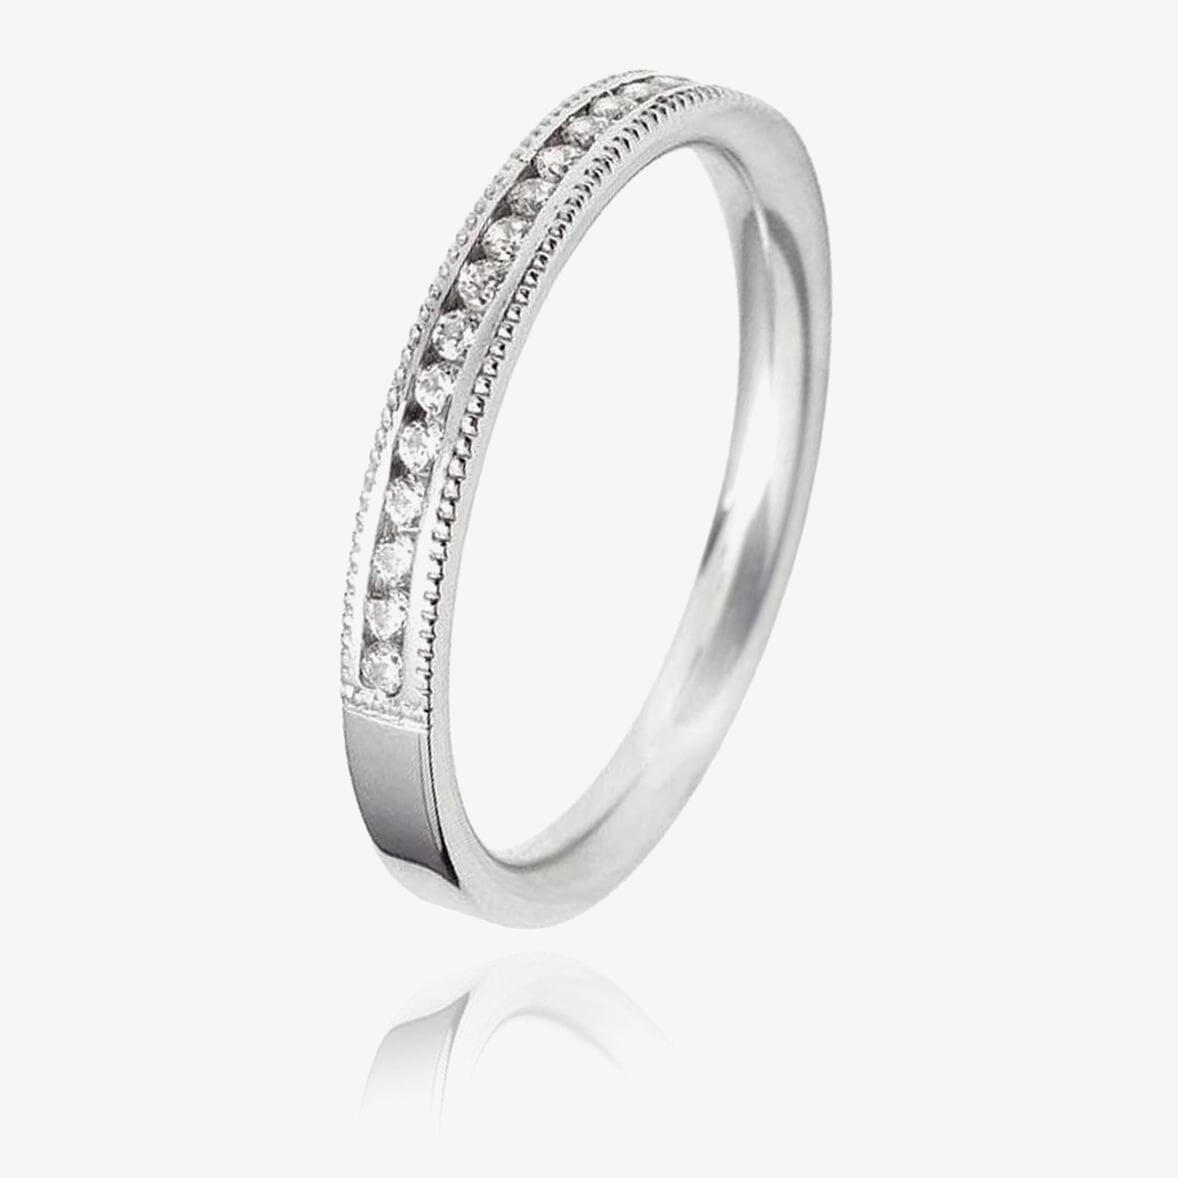 18ct White Gold 3.0mm Vintage Diamond Flat Court Wedding Ring WVGH7/3R125 18W HSI-L